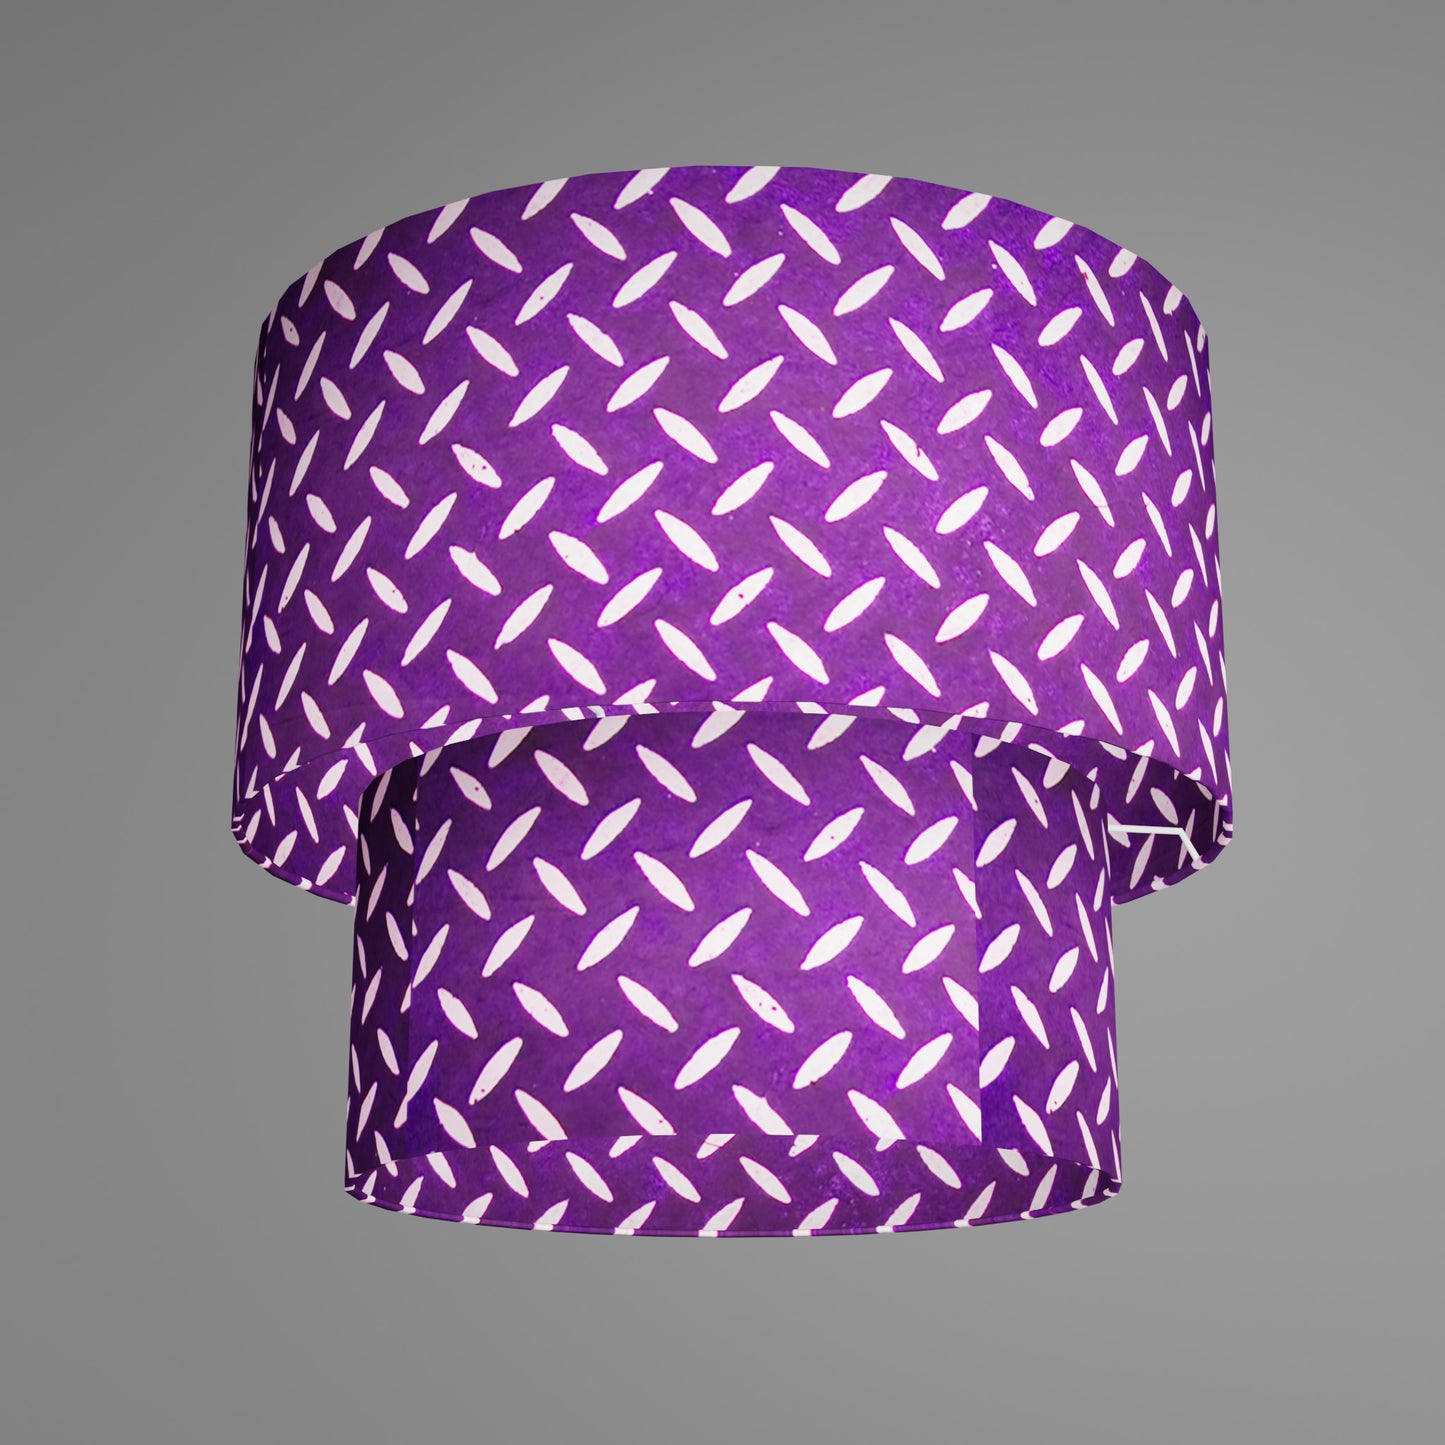 2 Tier Lamp Shade - P13 - Batik Tread Plate Purple, 40cm x 20cm & 30cm x 15cm